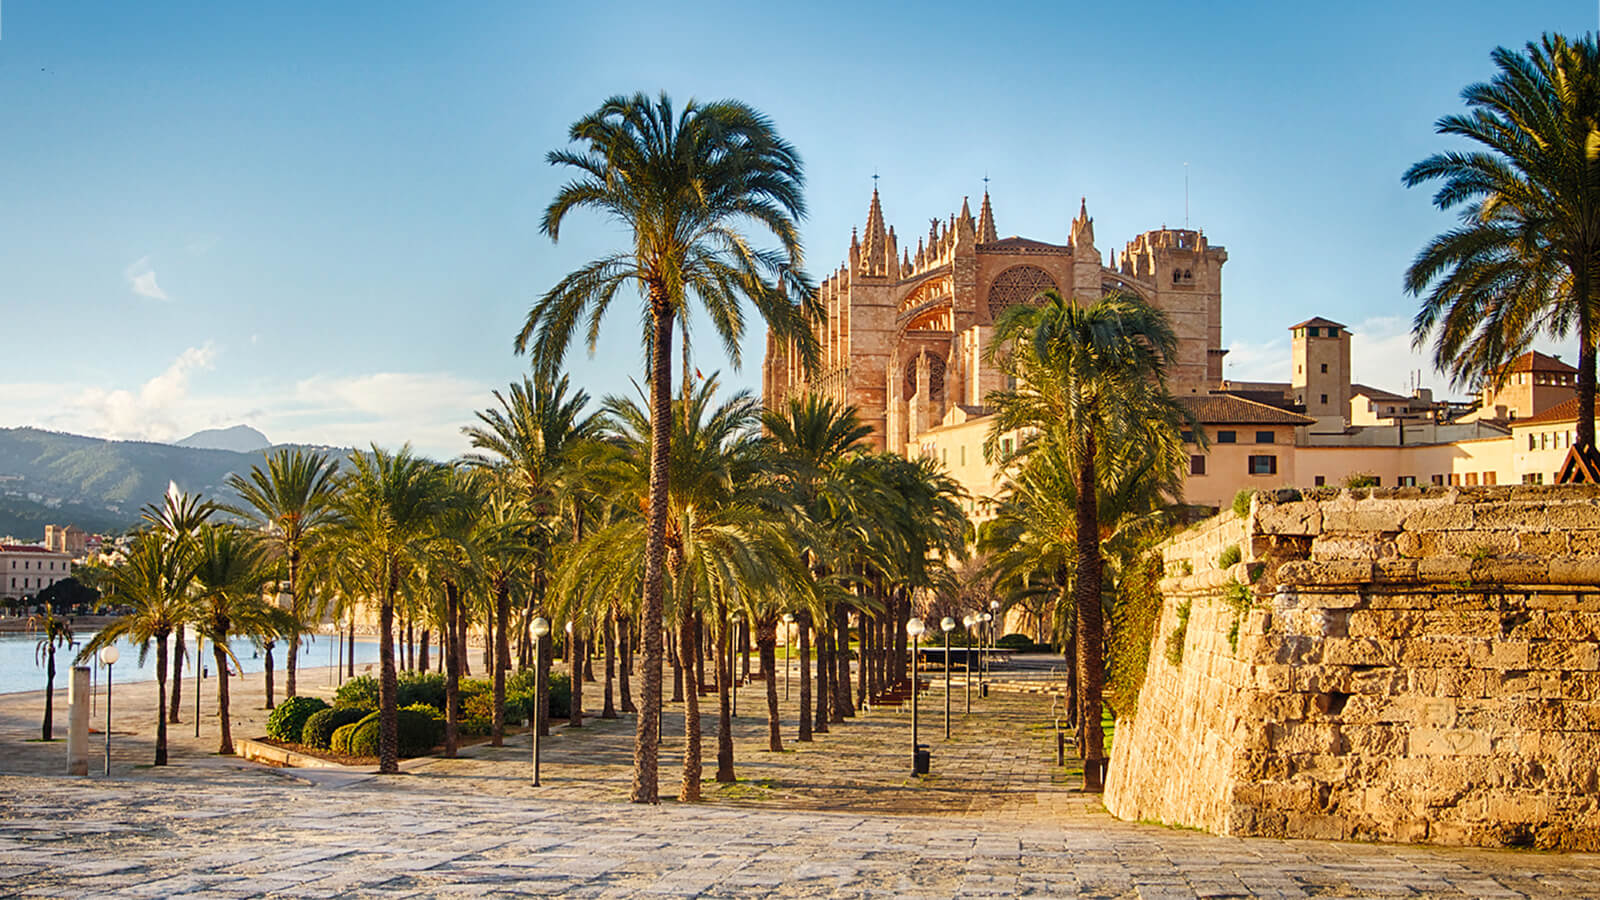 Image of Palma de Mallorca, Spain